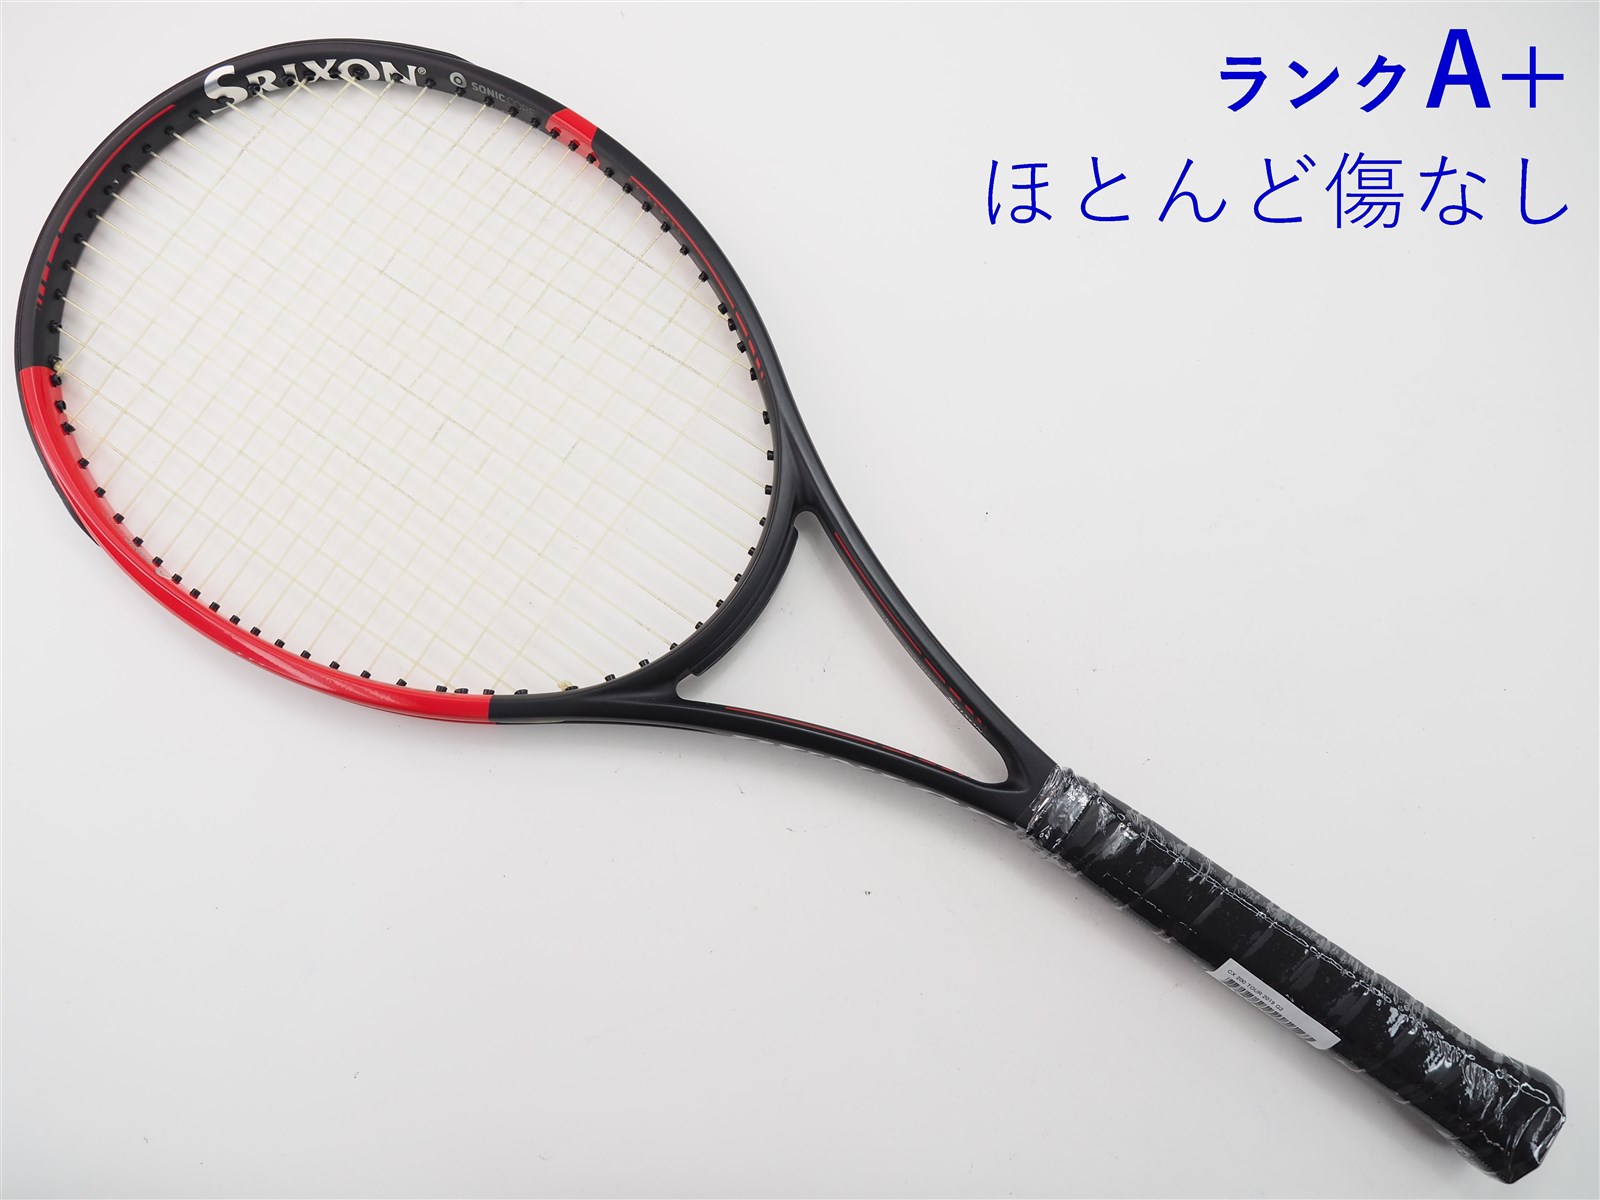 CX200ツアー(硬式テニスラケット) - ラケット(硬式用)